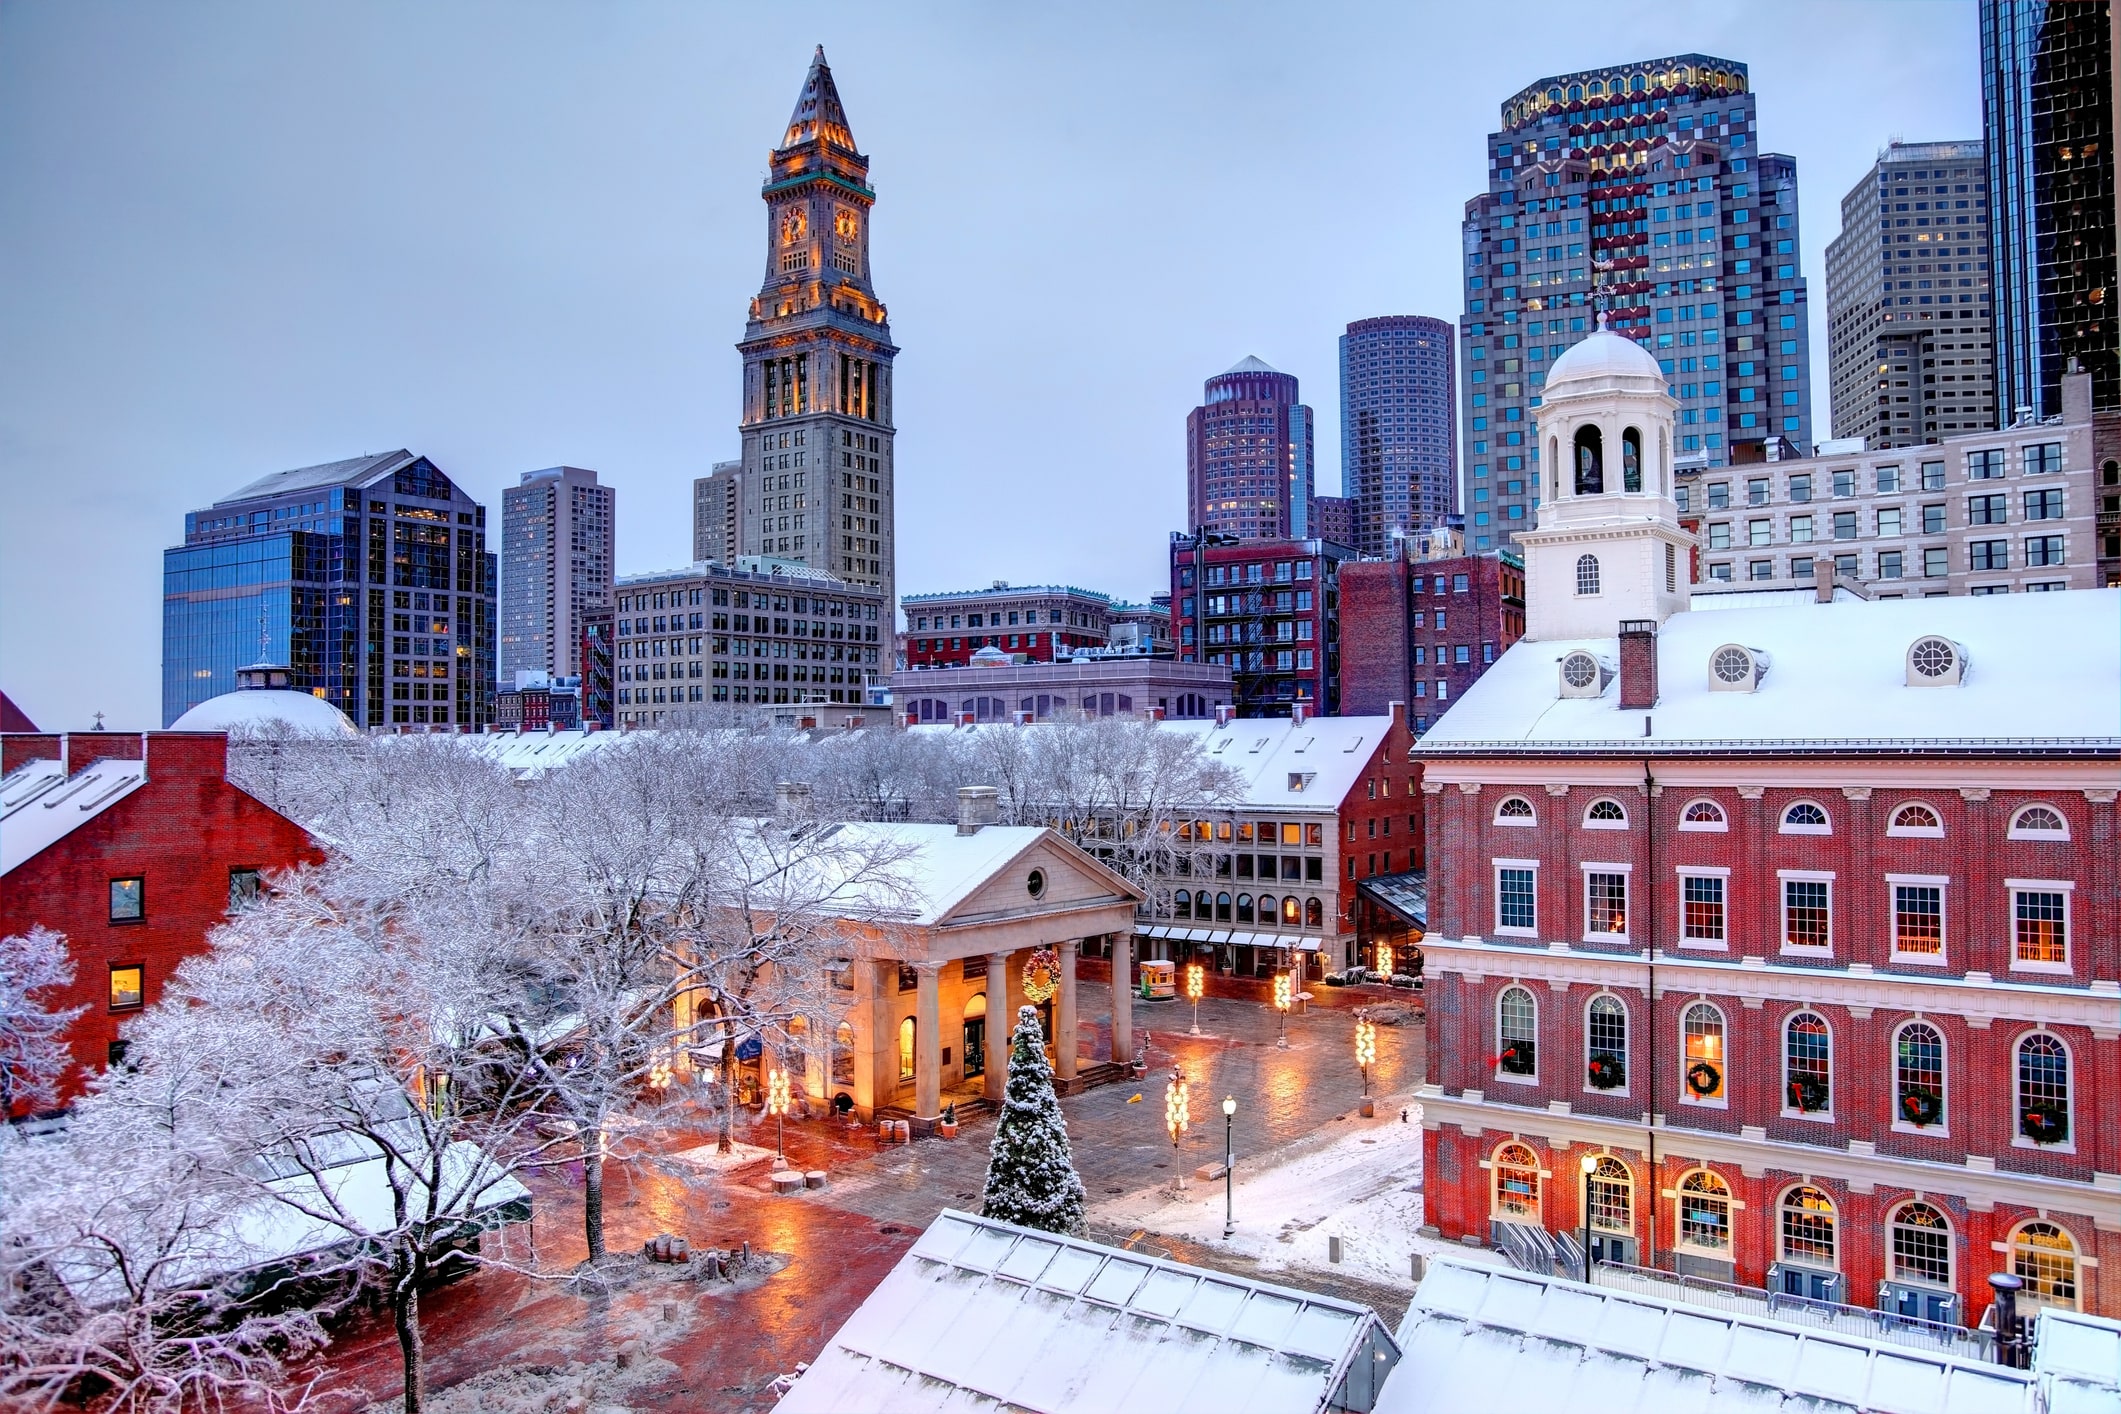 A snowy street view of Boston, Massachusetts.